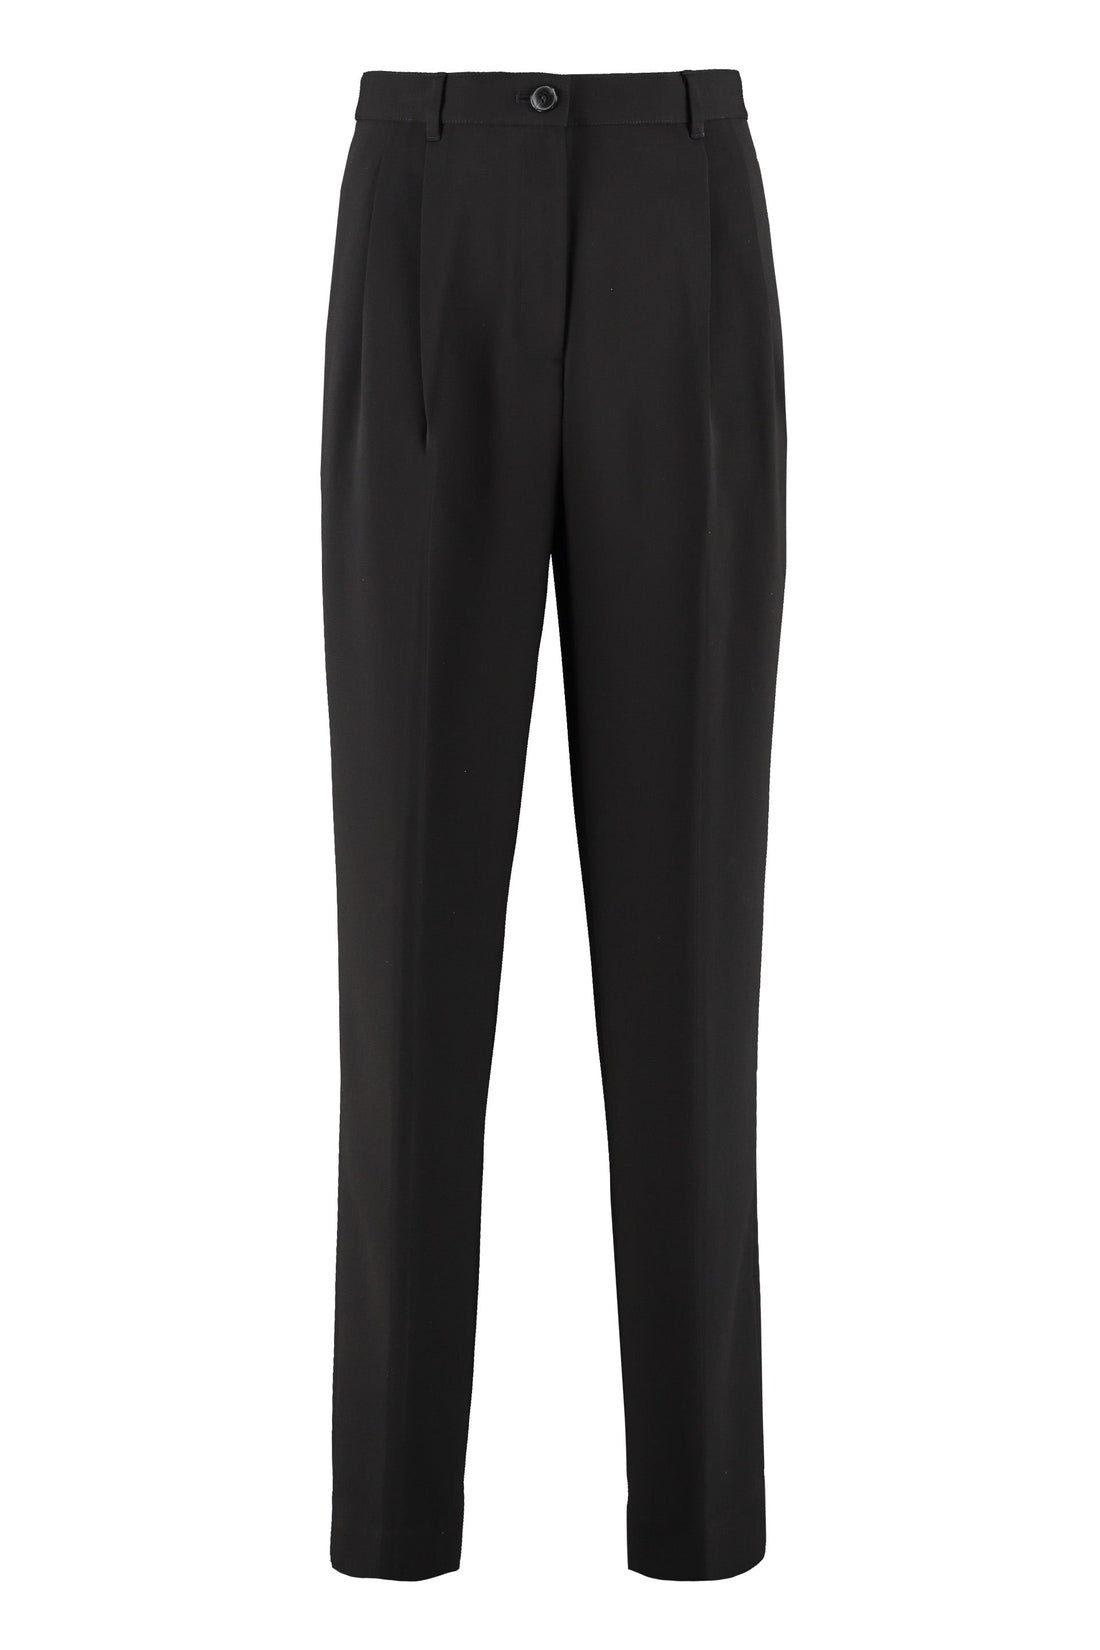 Tory Burch-OUTLET-SALE-High-waist crêpe trousers-ARCHIVIST